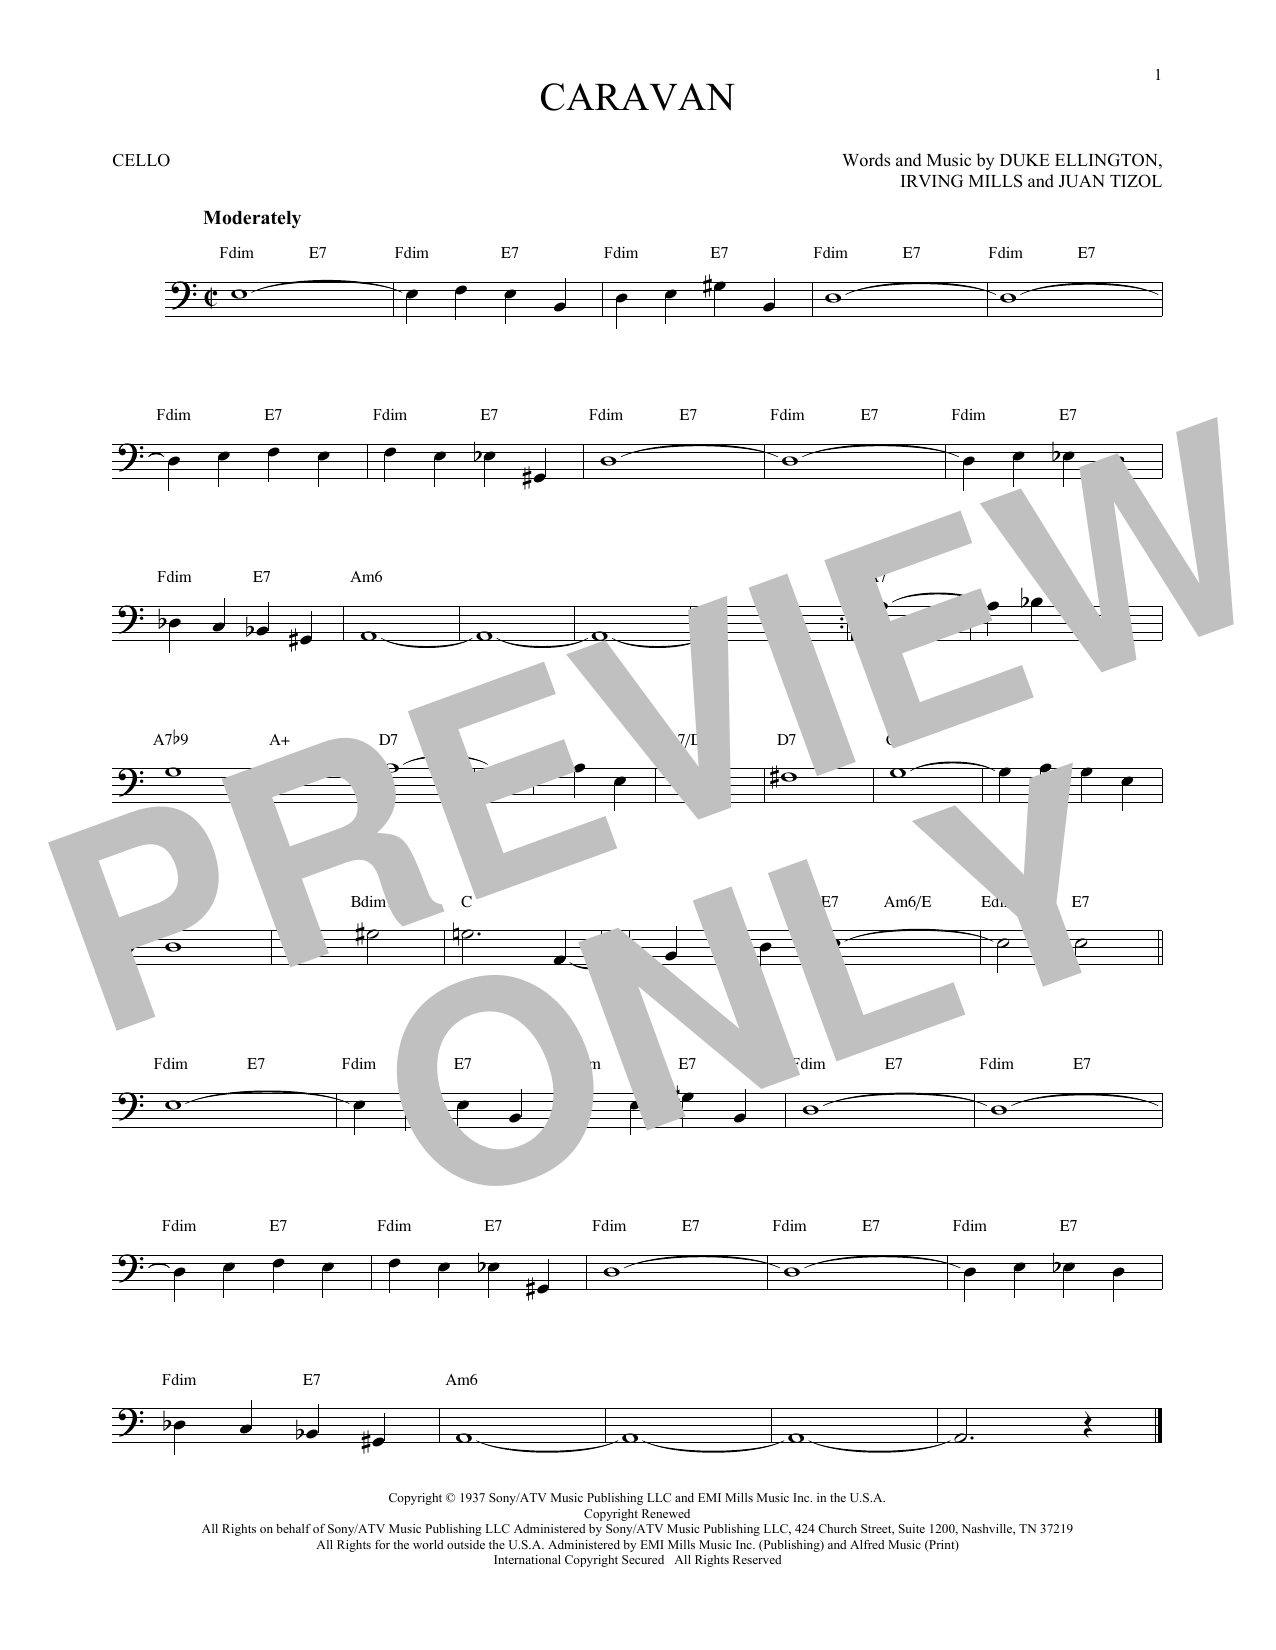 Download Juan Tizol & Duke Ellington Caravan Sheet Music and learn how to play Cello PDF digital score in minutes